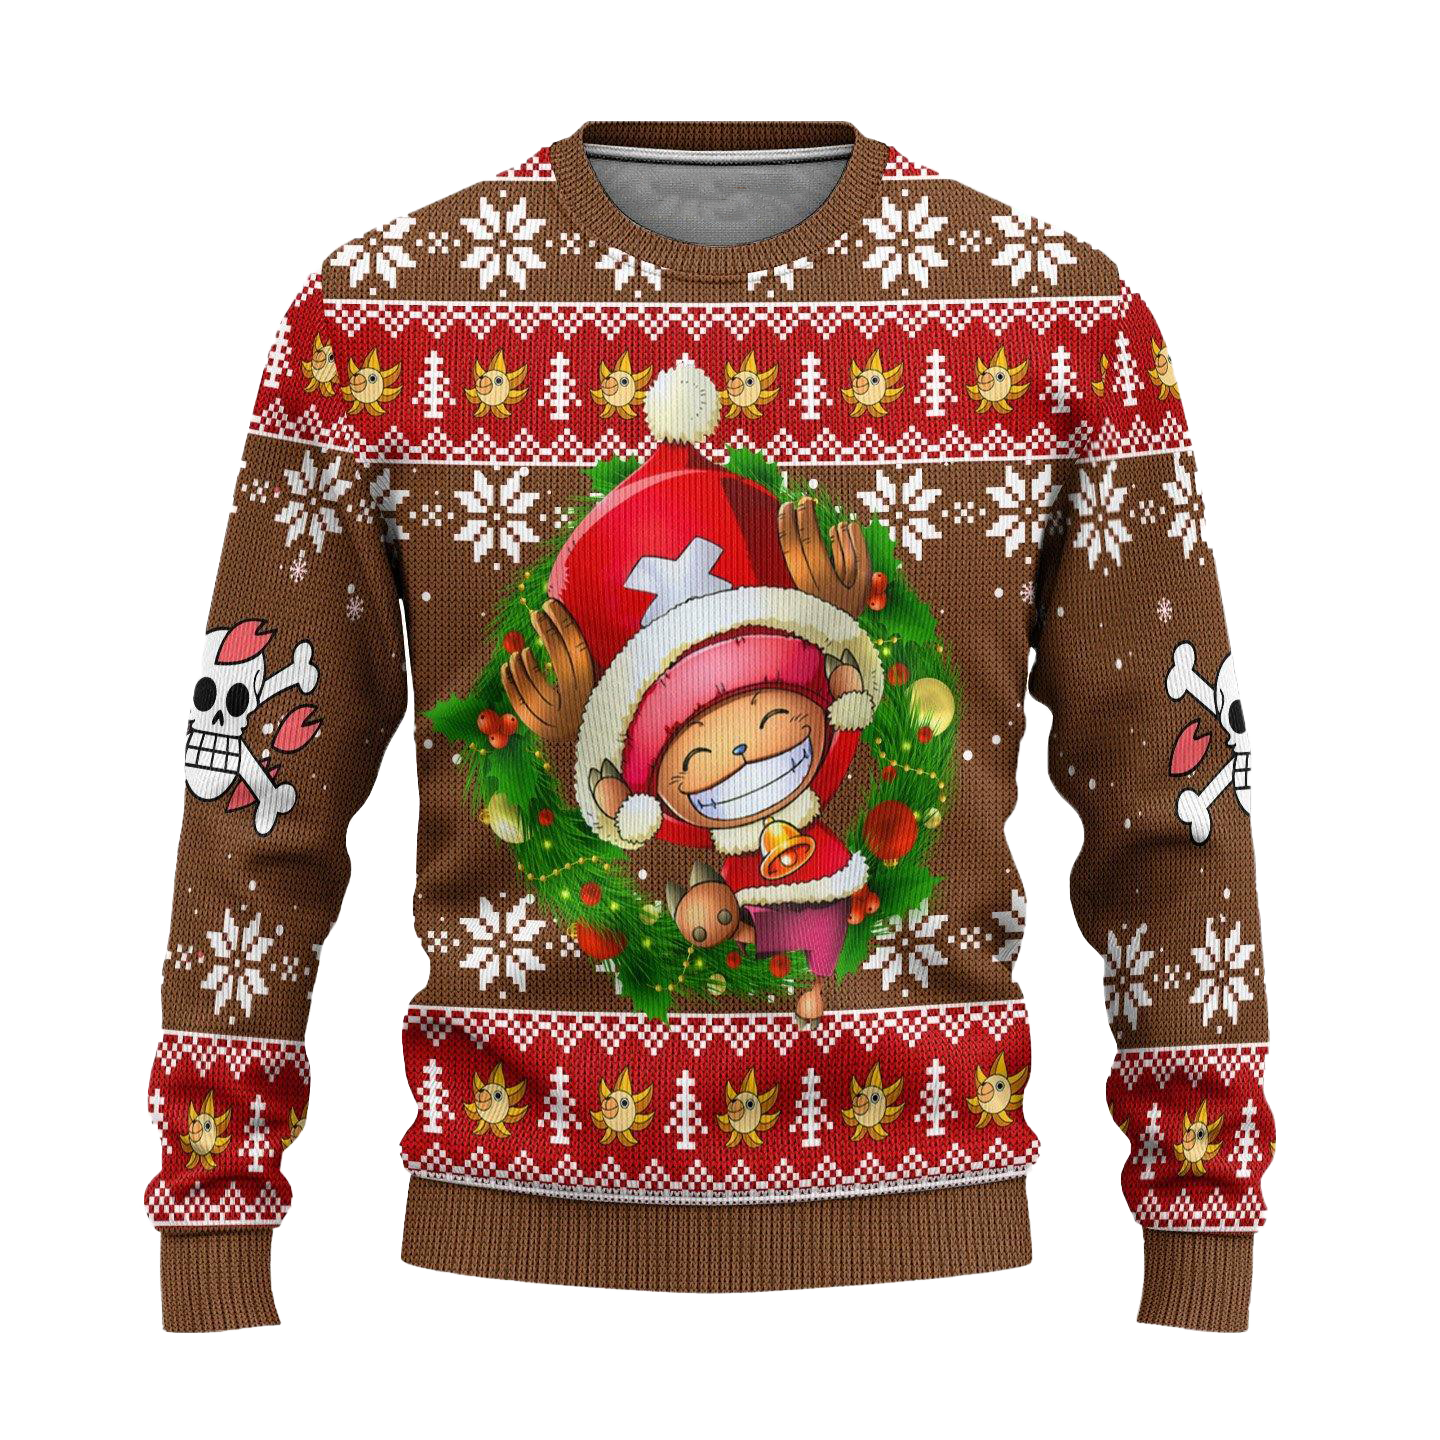 Tony Tony Chopper One Piece Anime Ugly Christmas Sweater Xmas Gift